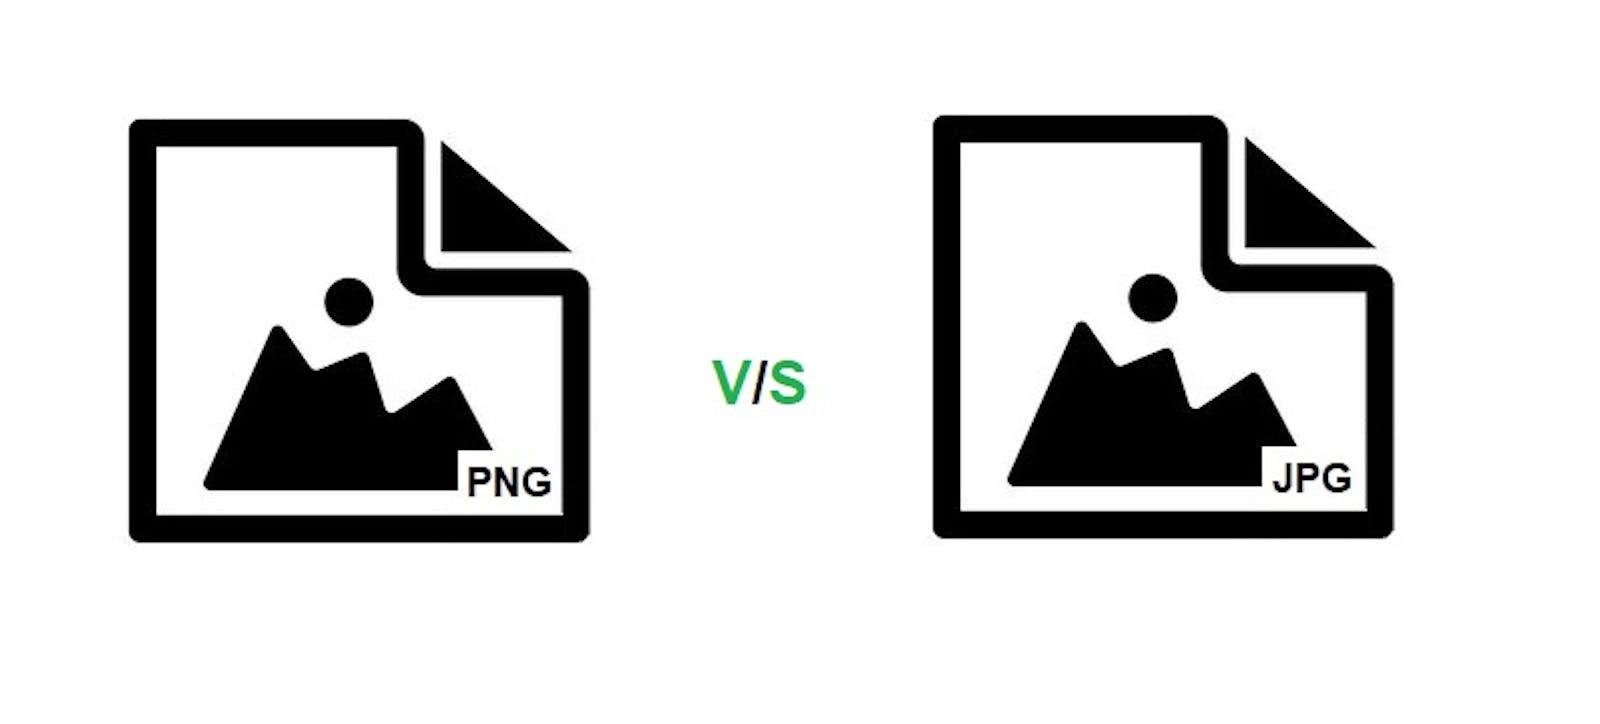 Data Storage in Images: PNG vs JPG